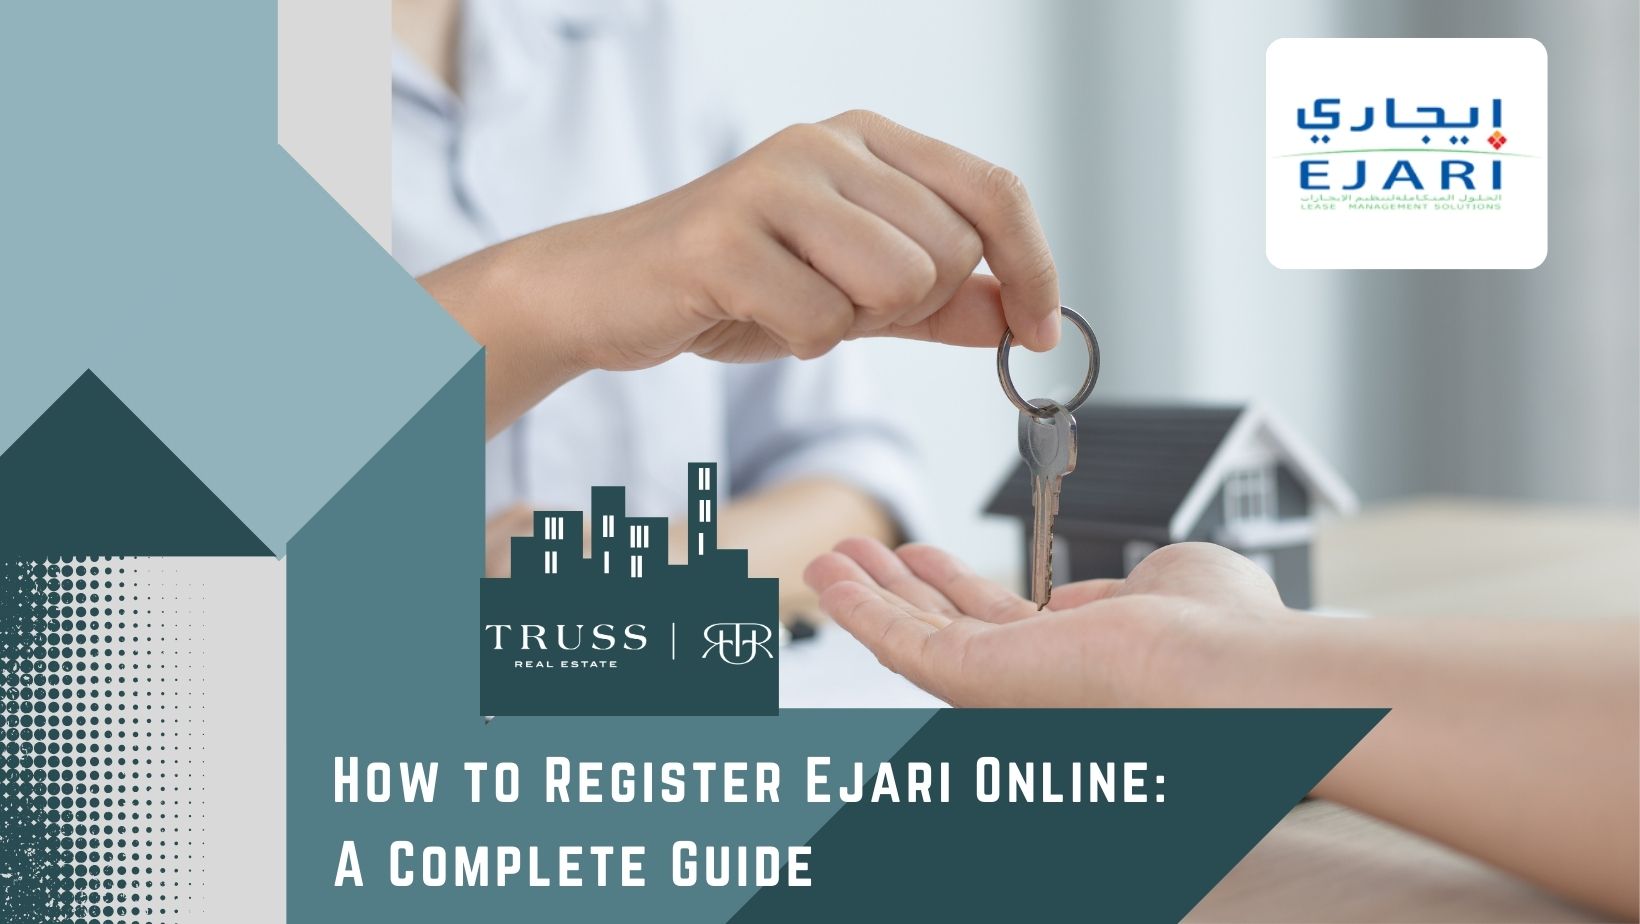 How to register ejari online